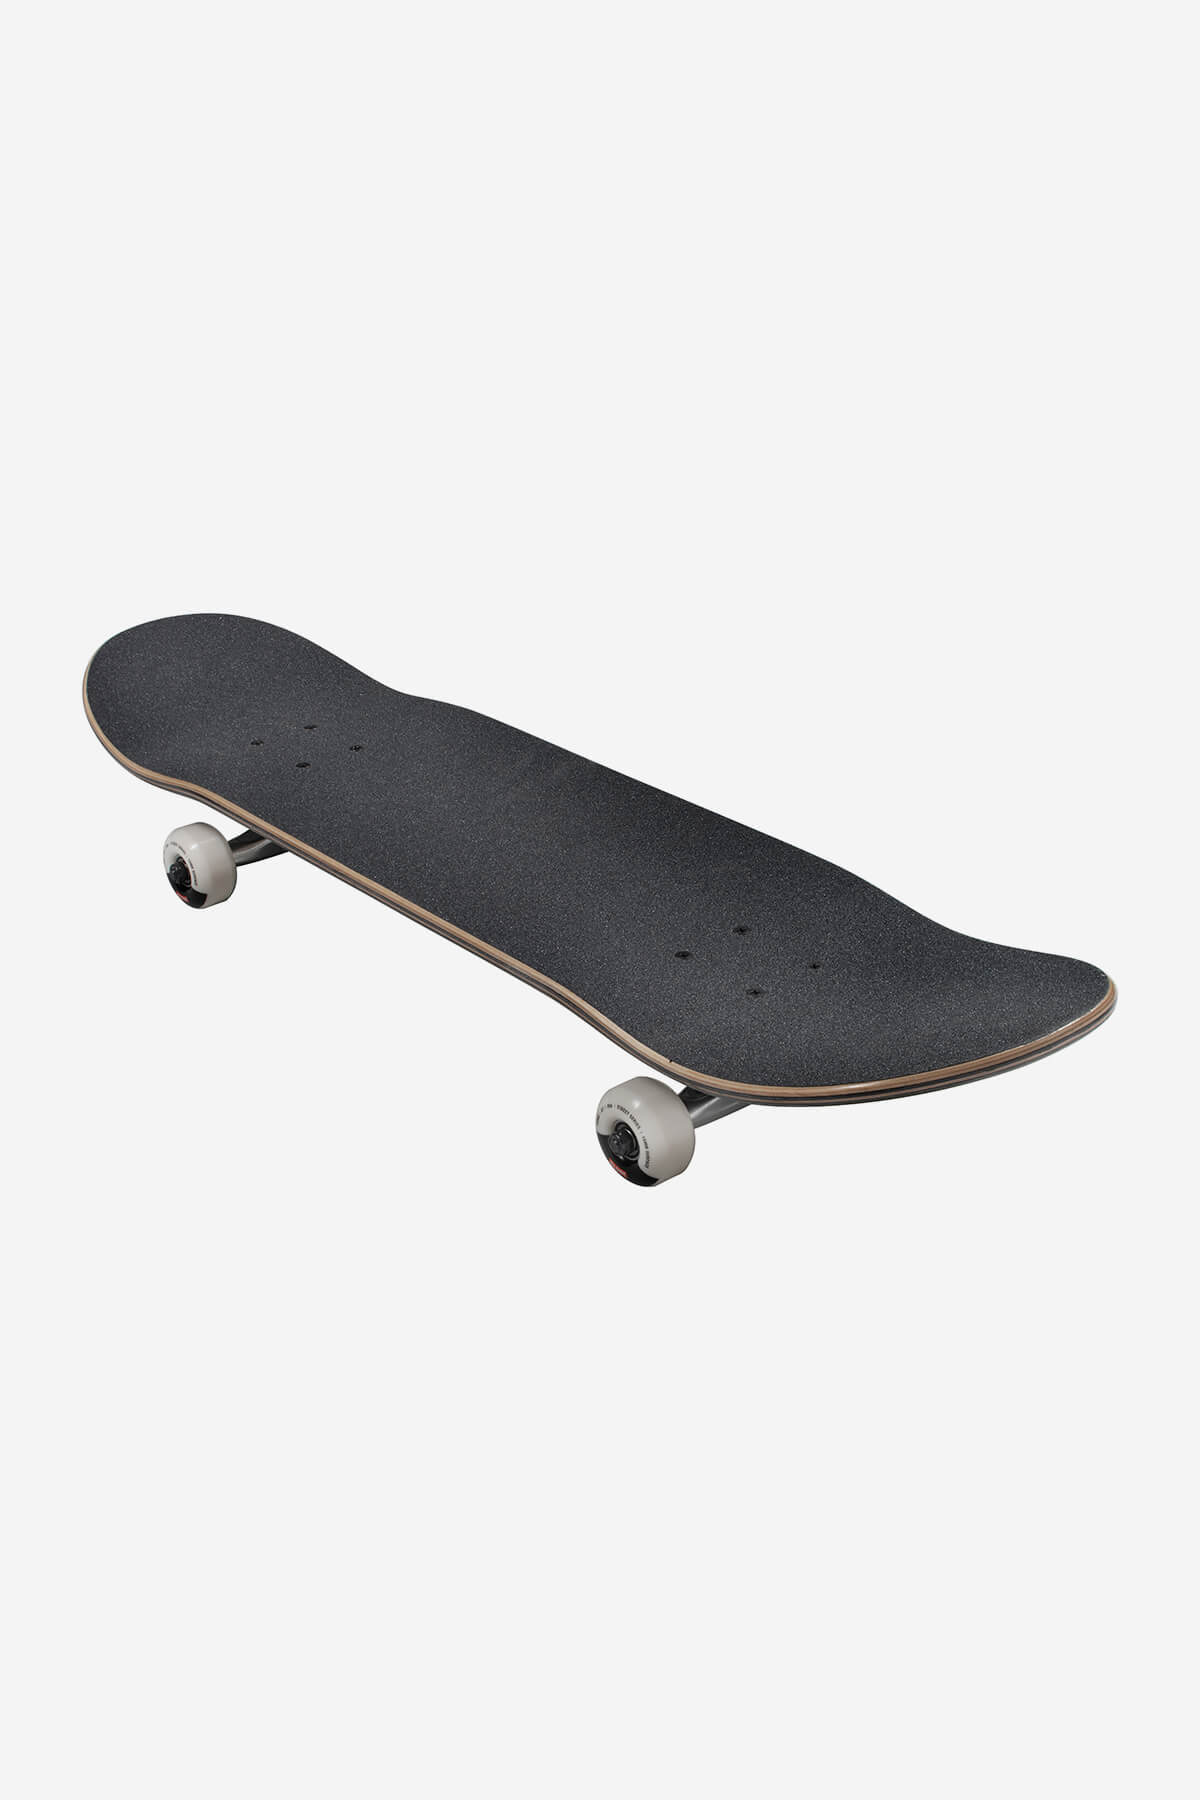 Globe Skateboard completa G1 Lineform 8.0" Completa Skateboard en Olive